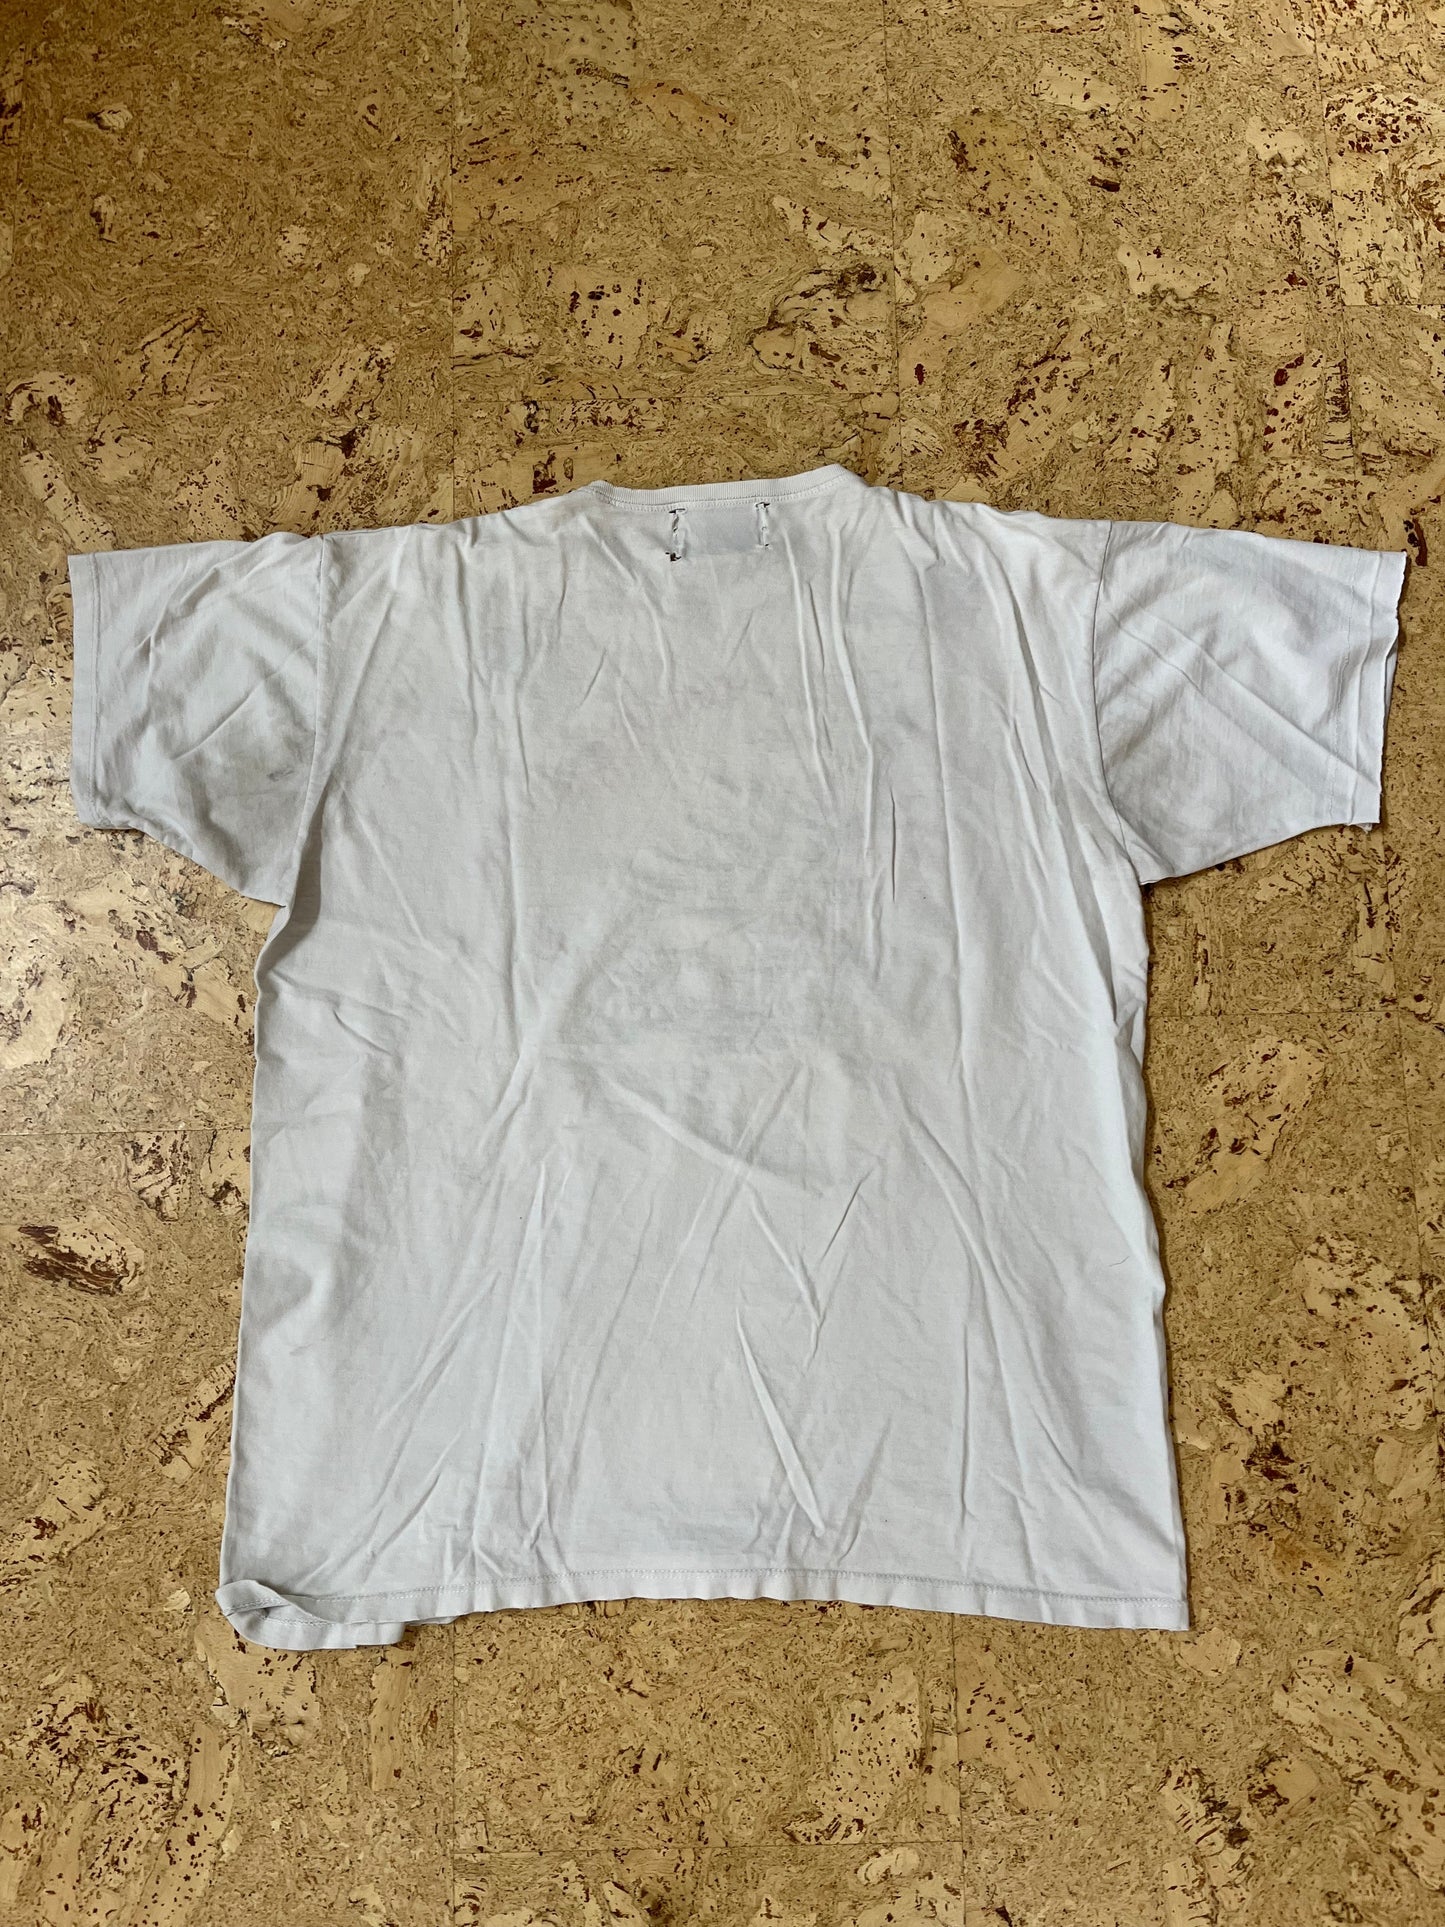 1995 Swan Magic Hand Embroidered California T-Shirt Thrashed